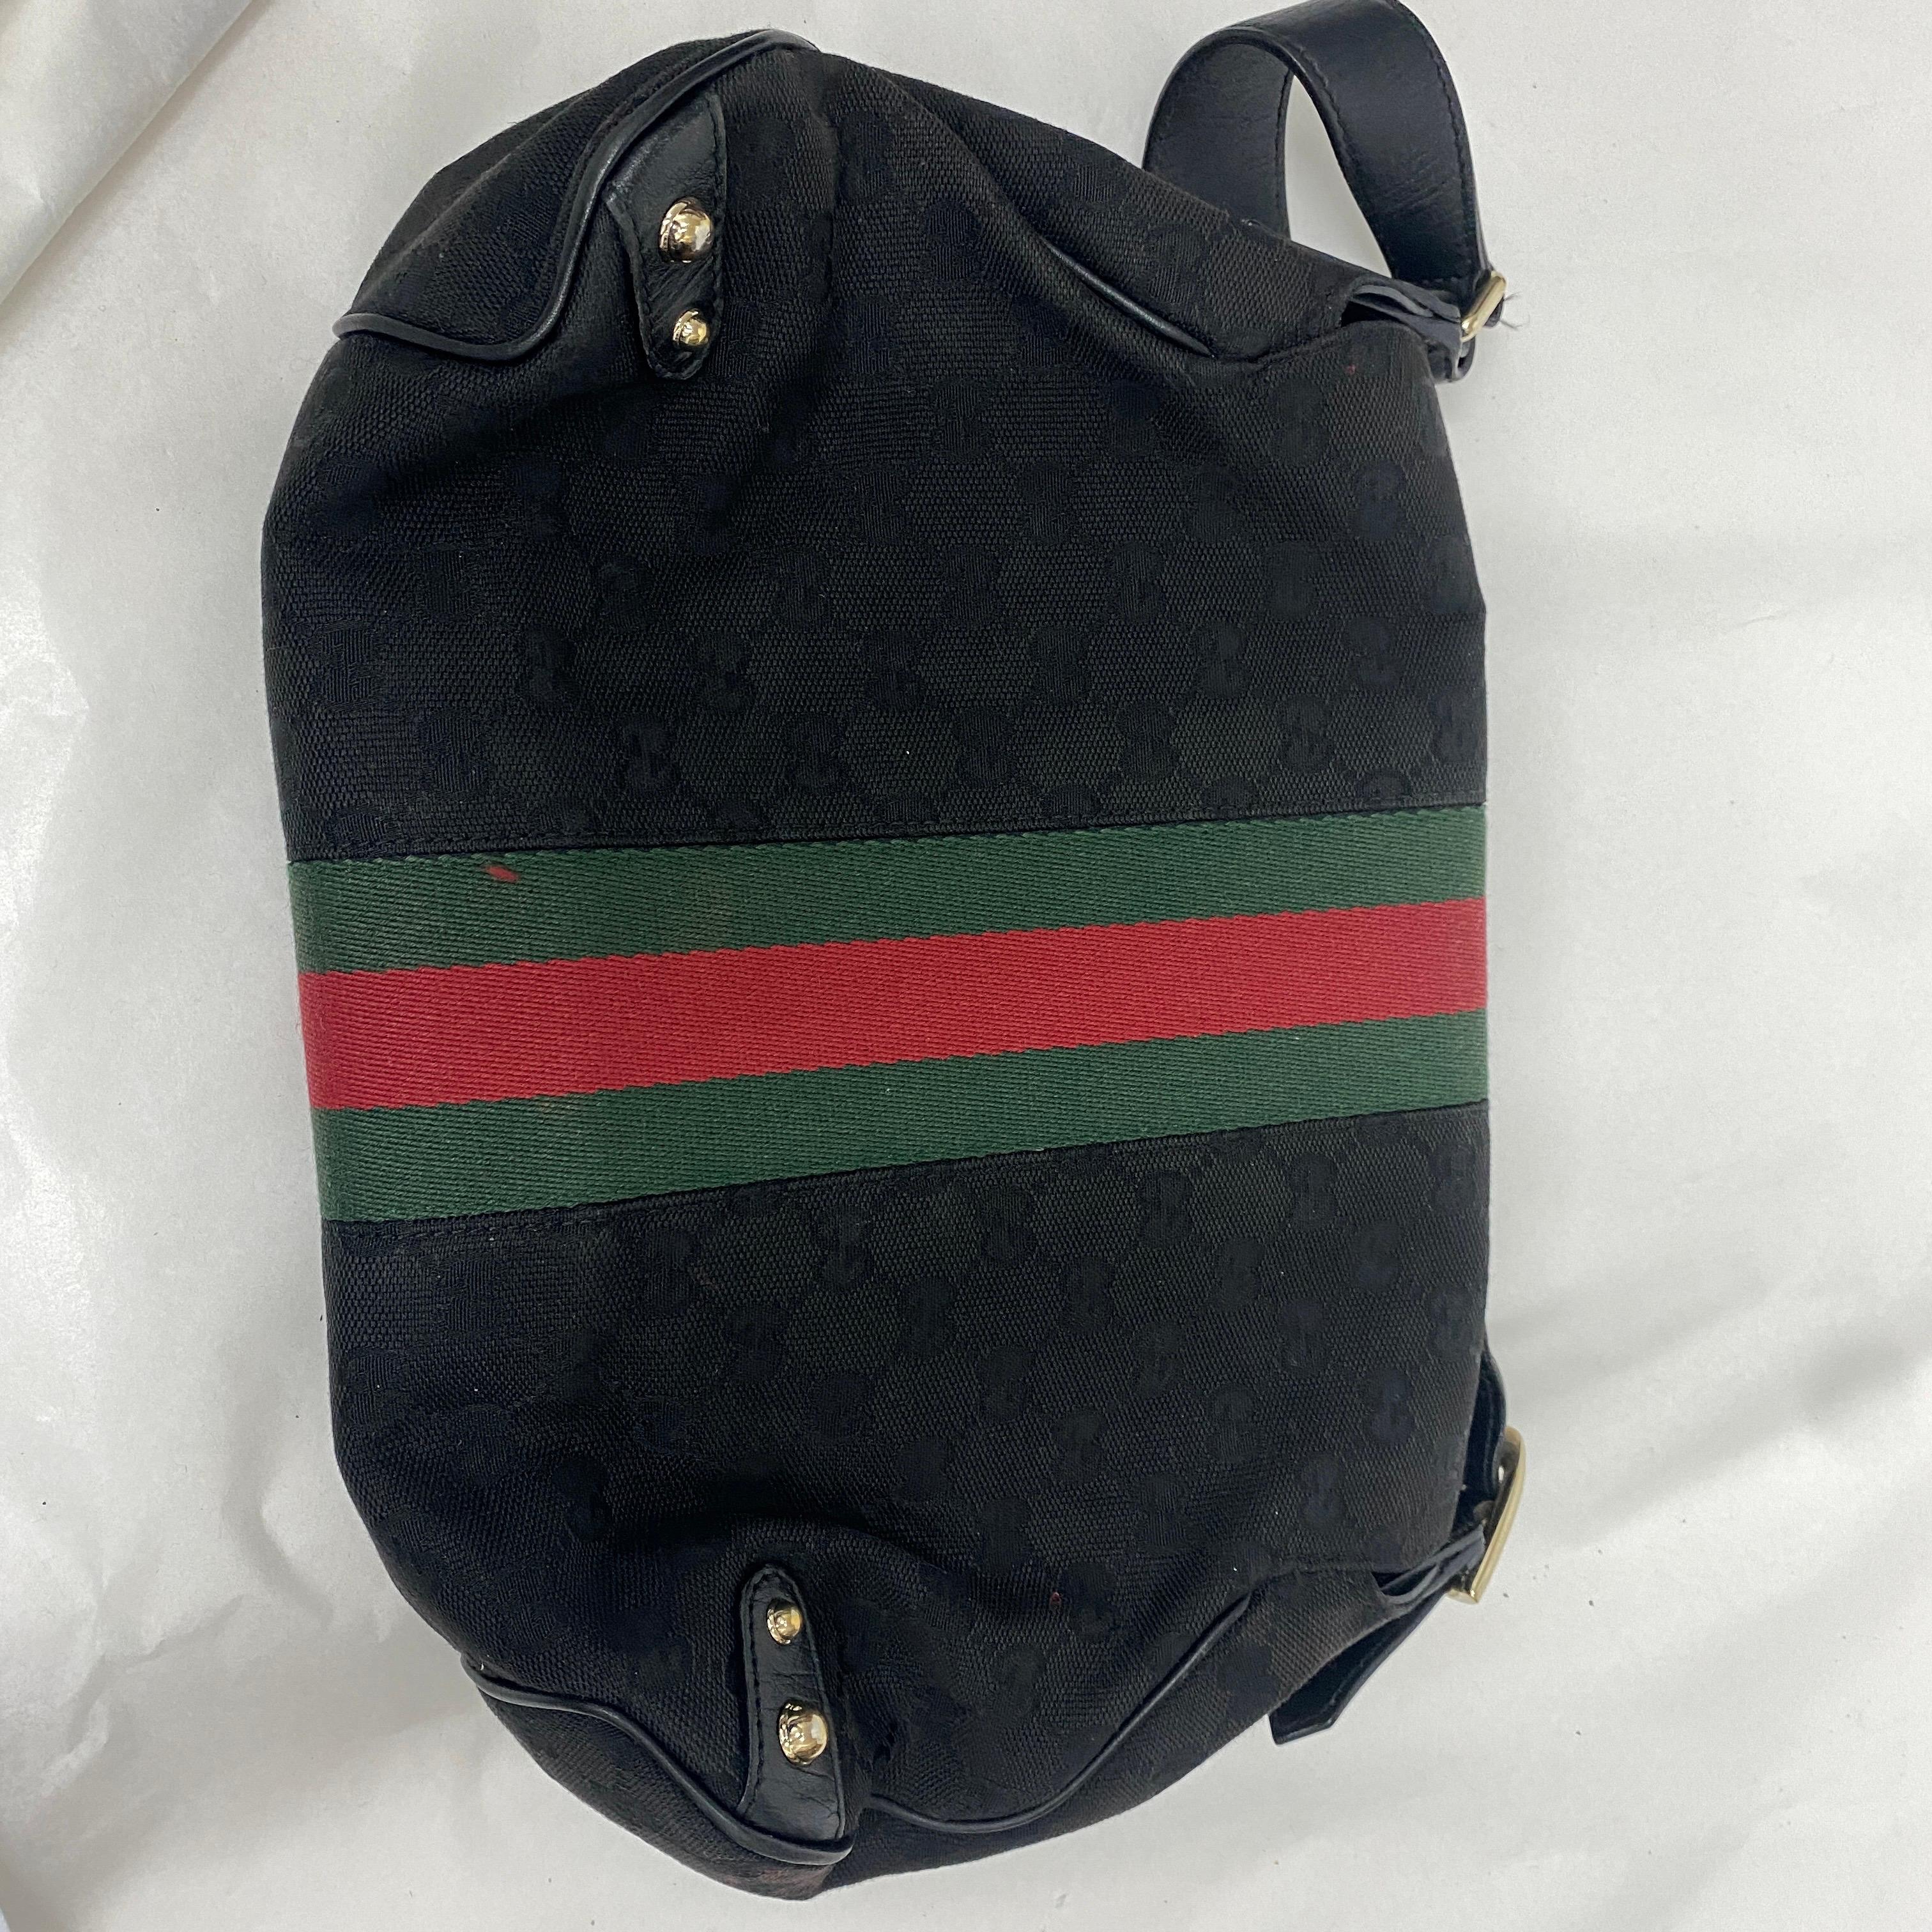 1980s Vintage Black, Red and Green Gucci Handbag 1